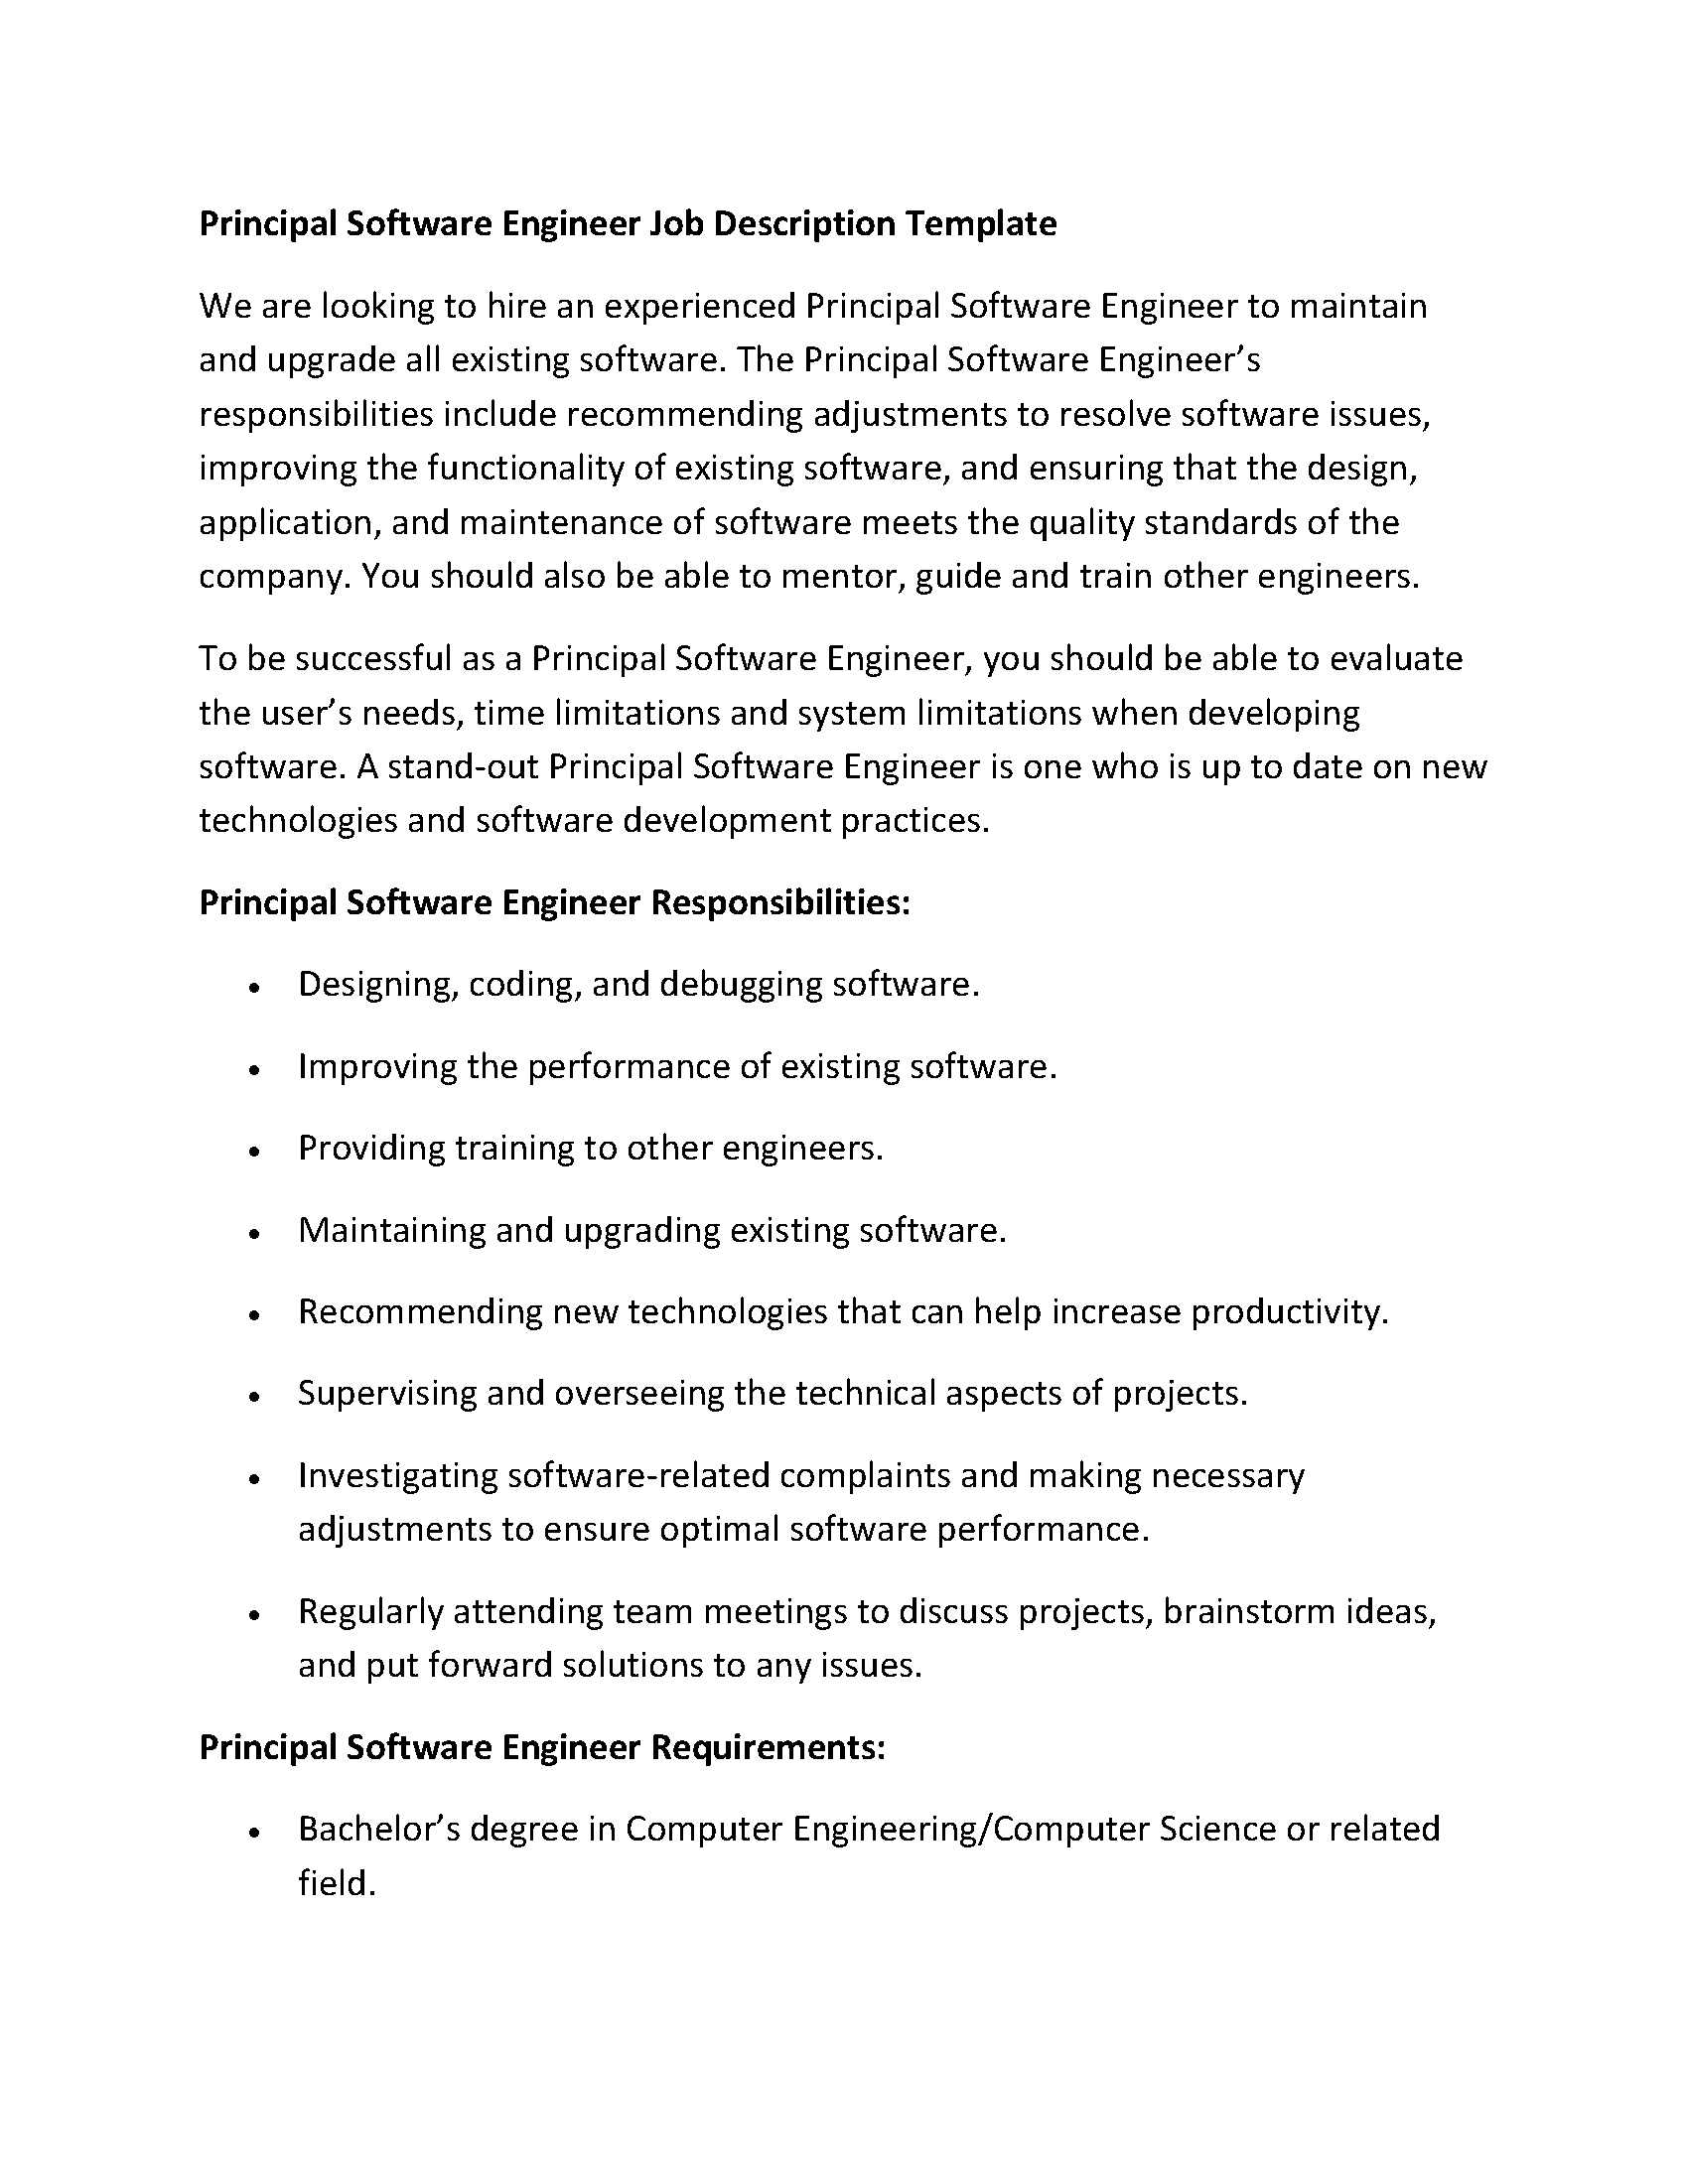 Principal Software Engineer Job Description Template